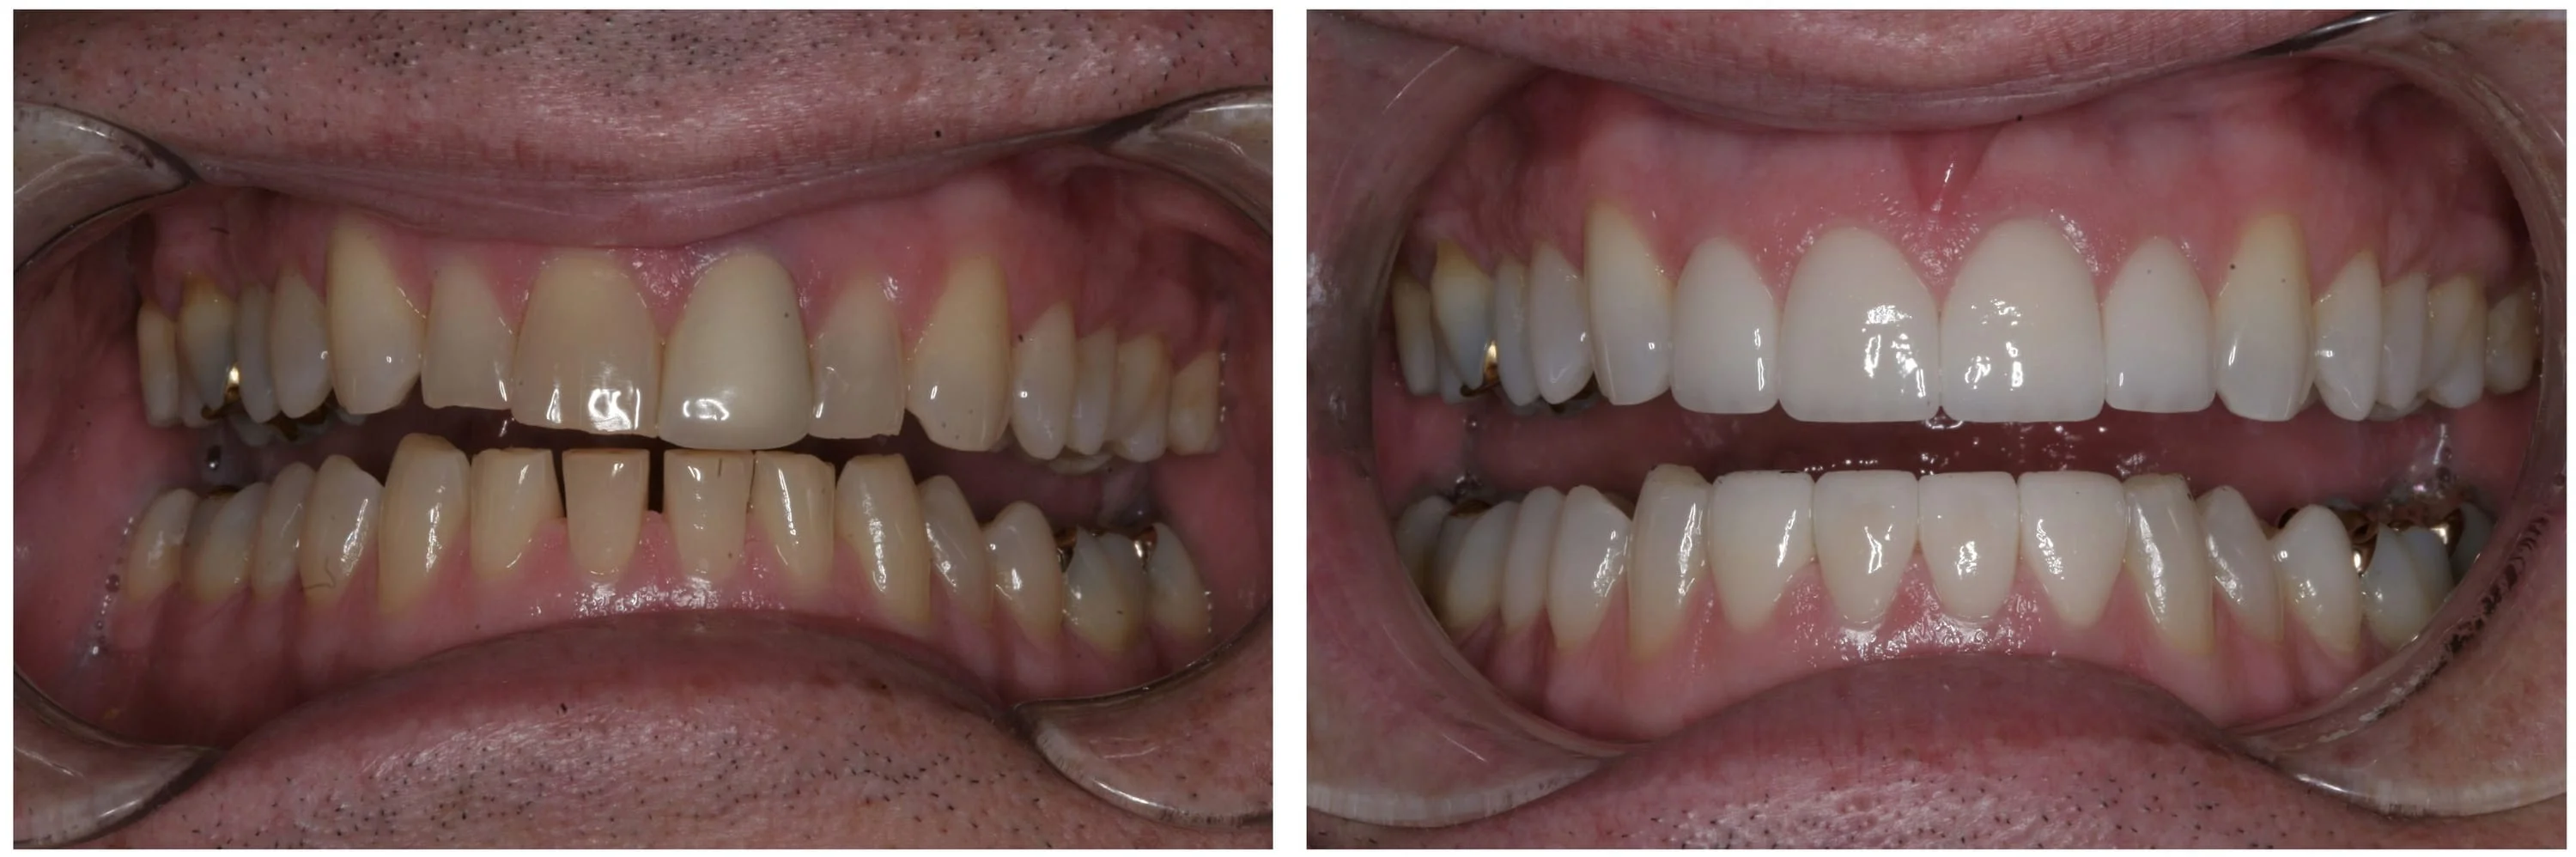 Teeth Whitening & Eight Crowns